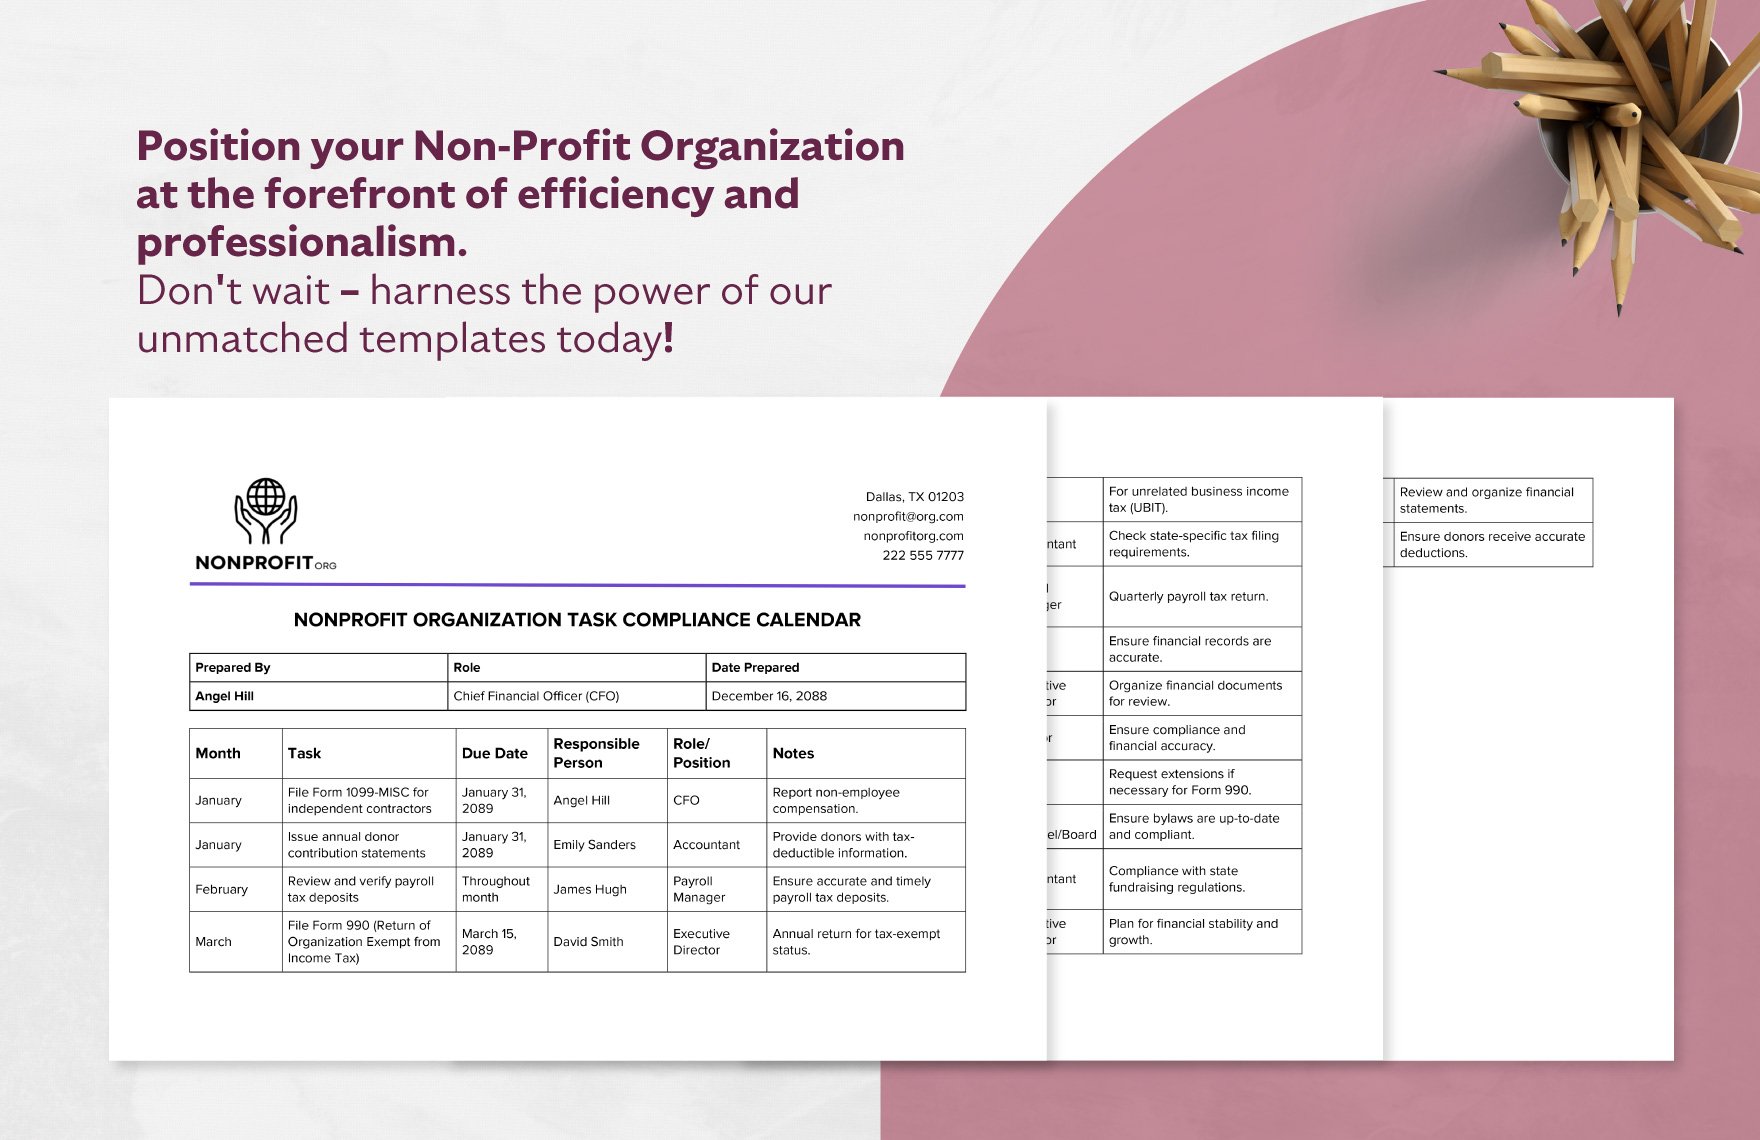 Nonprofit Organization Tax Compliance Calendar Template